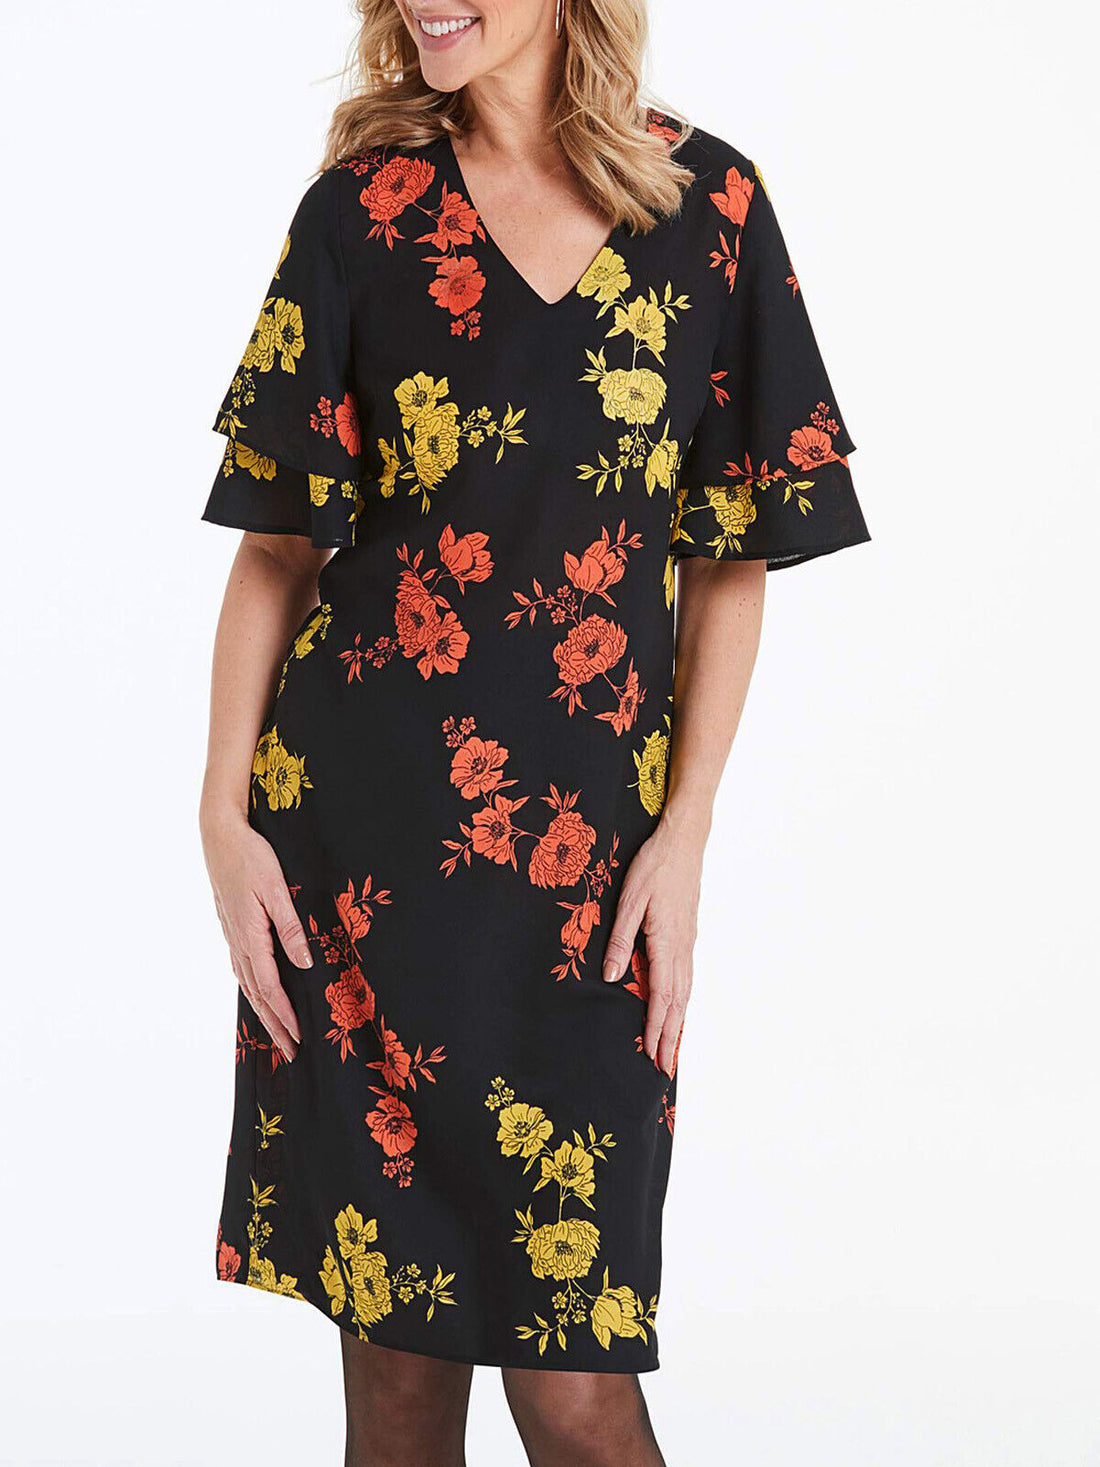 New Capsule Black Floral Print Ruffle Sleeve Dress in Sizes 16, 20, 26